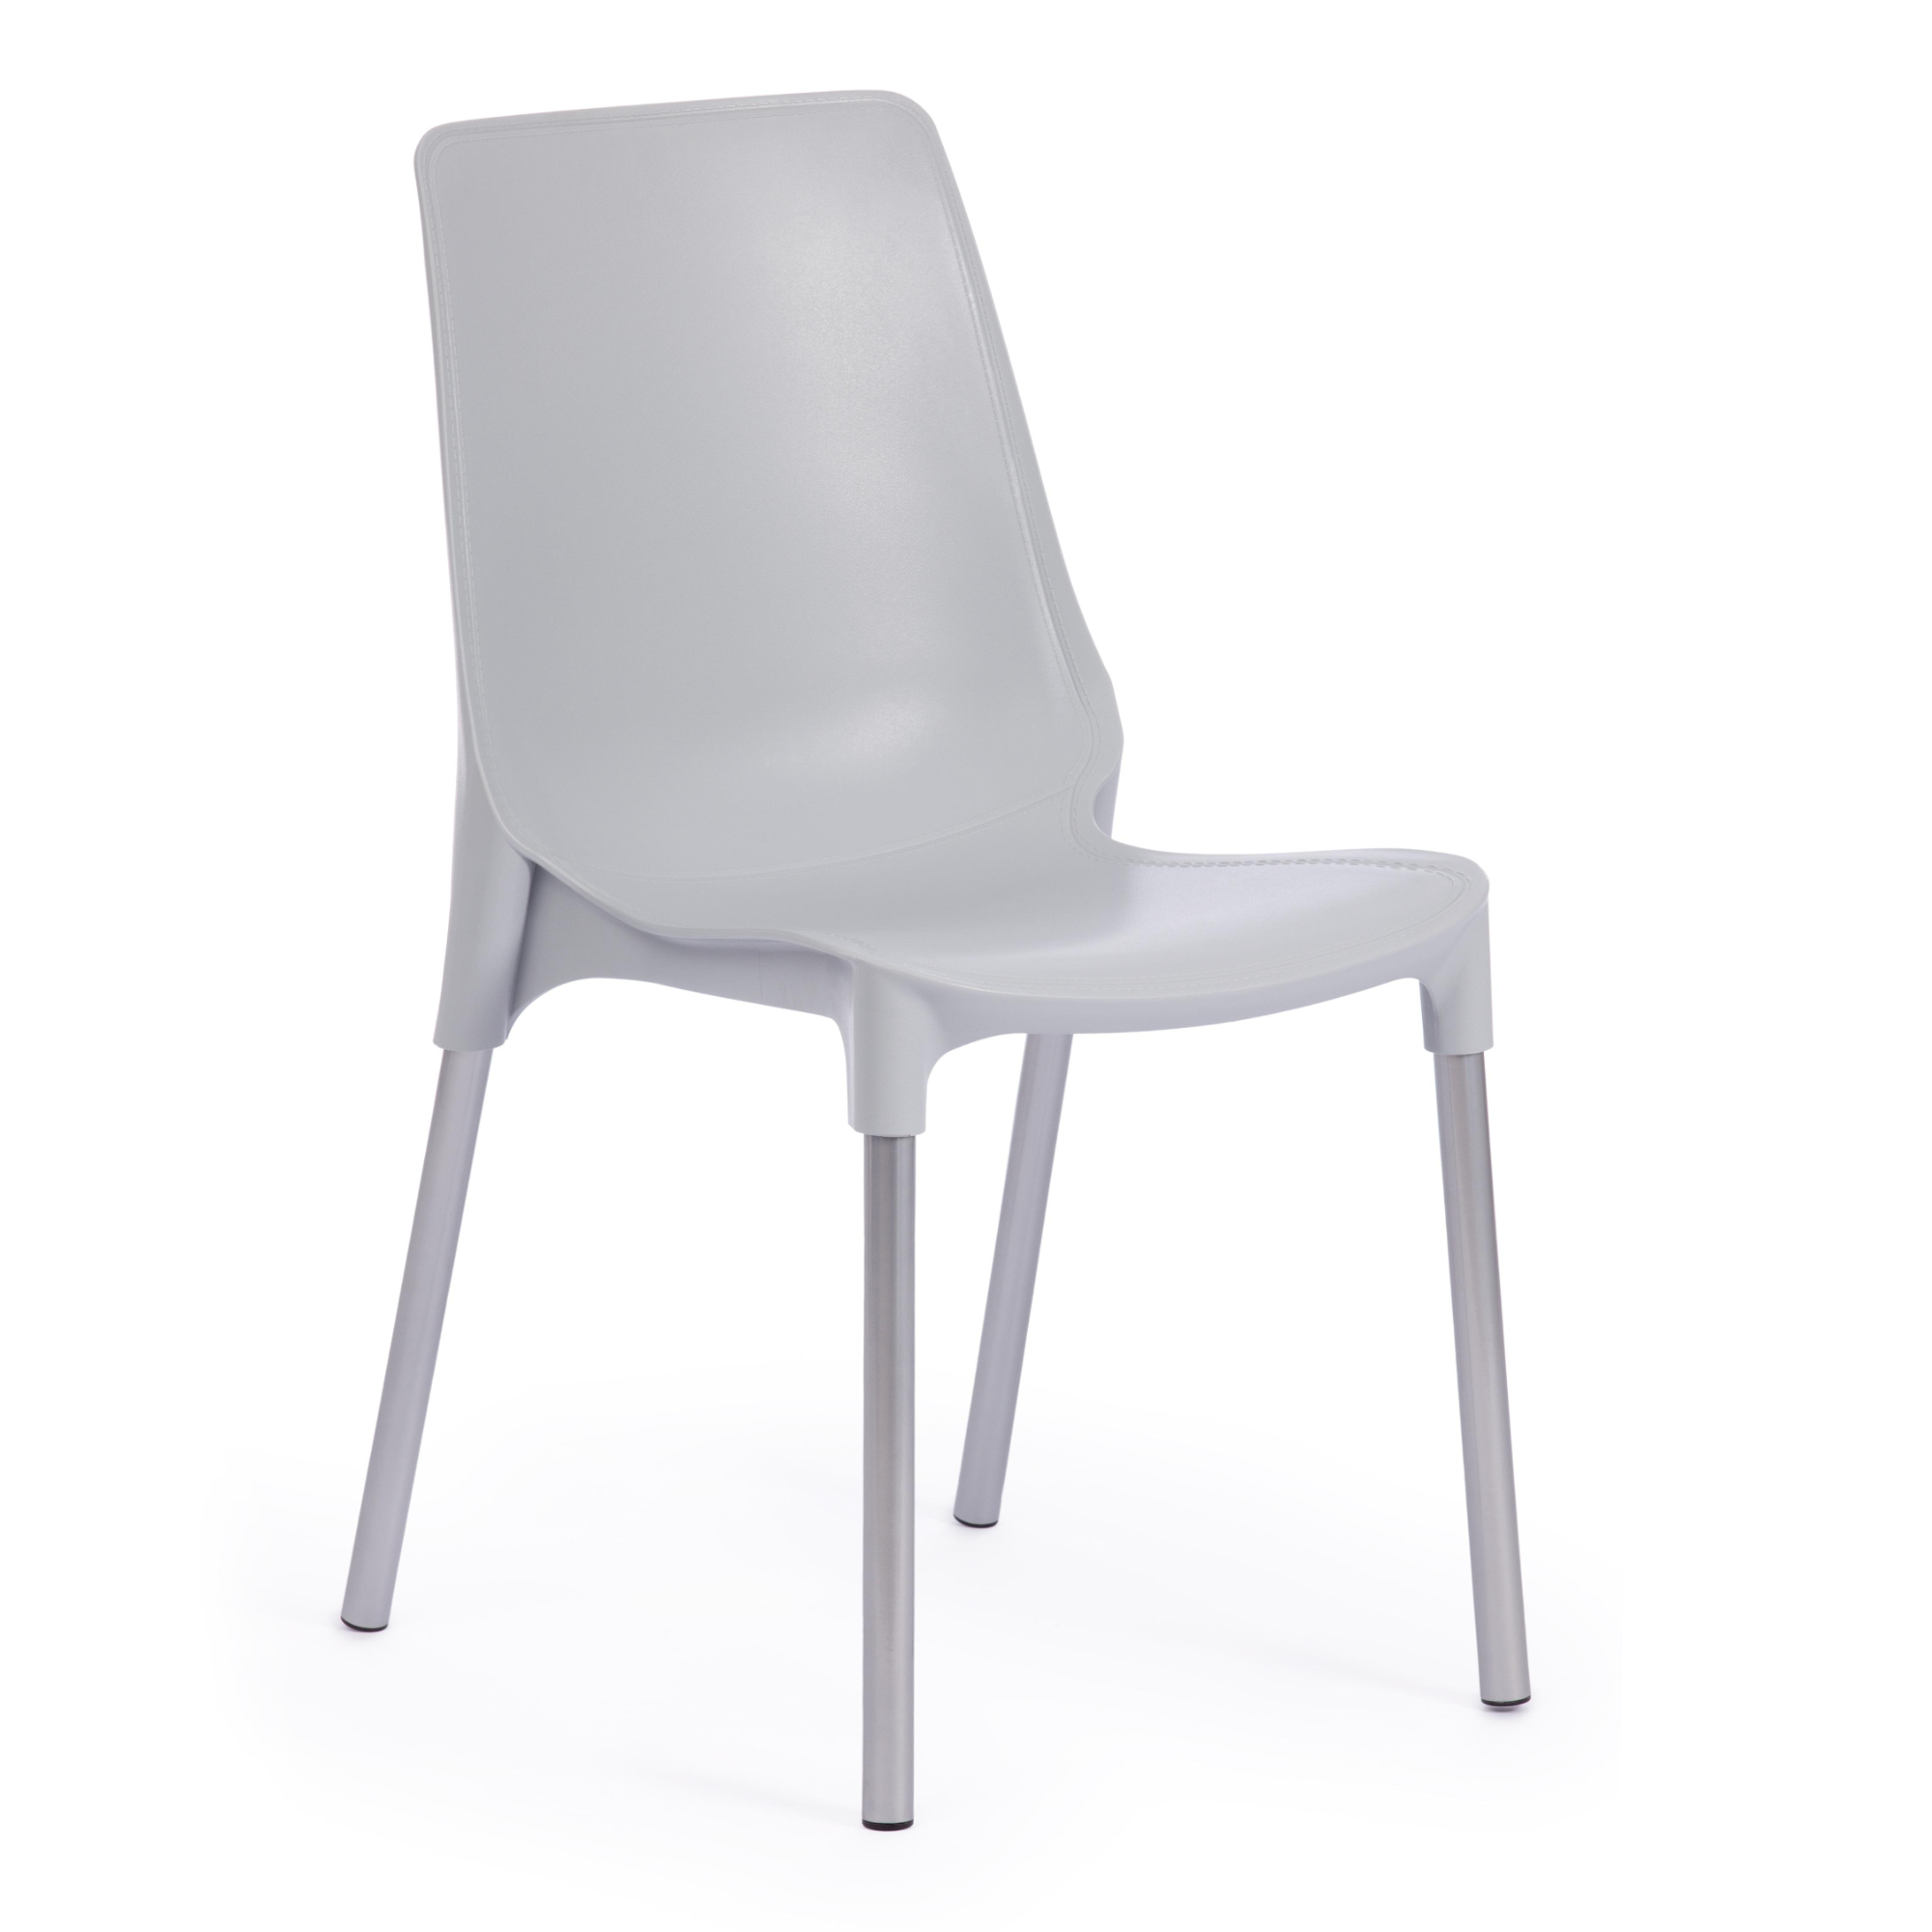 Стул ТС Genius пластиковый серый с хромированными ножками 46х56х84 см стул тс cindy chair пластиковый с ножками из бука бежевый 45х51х82 см